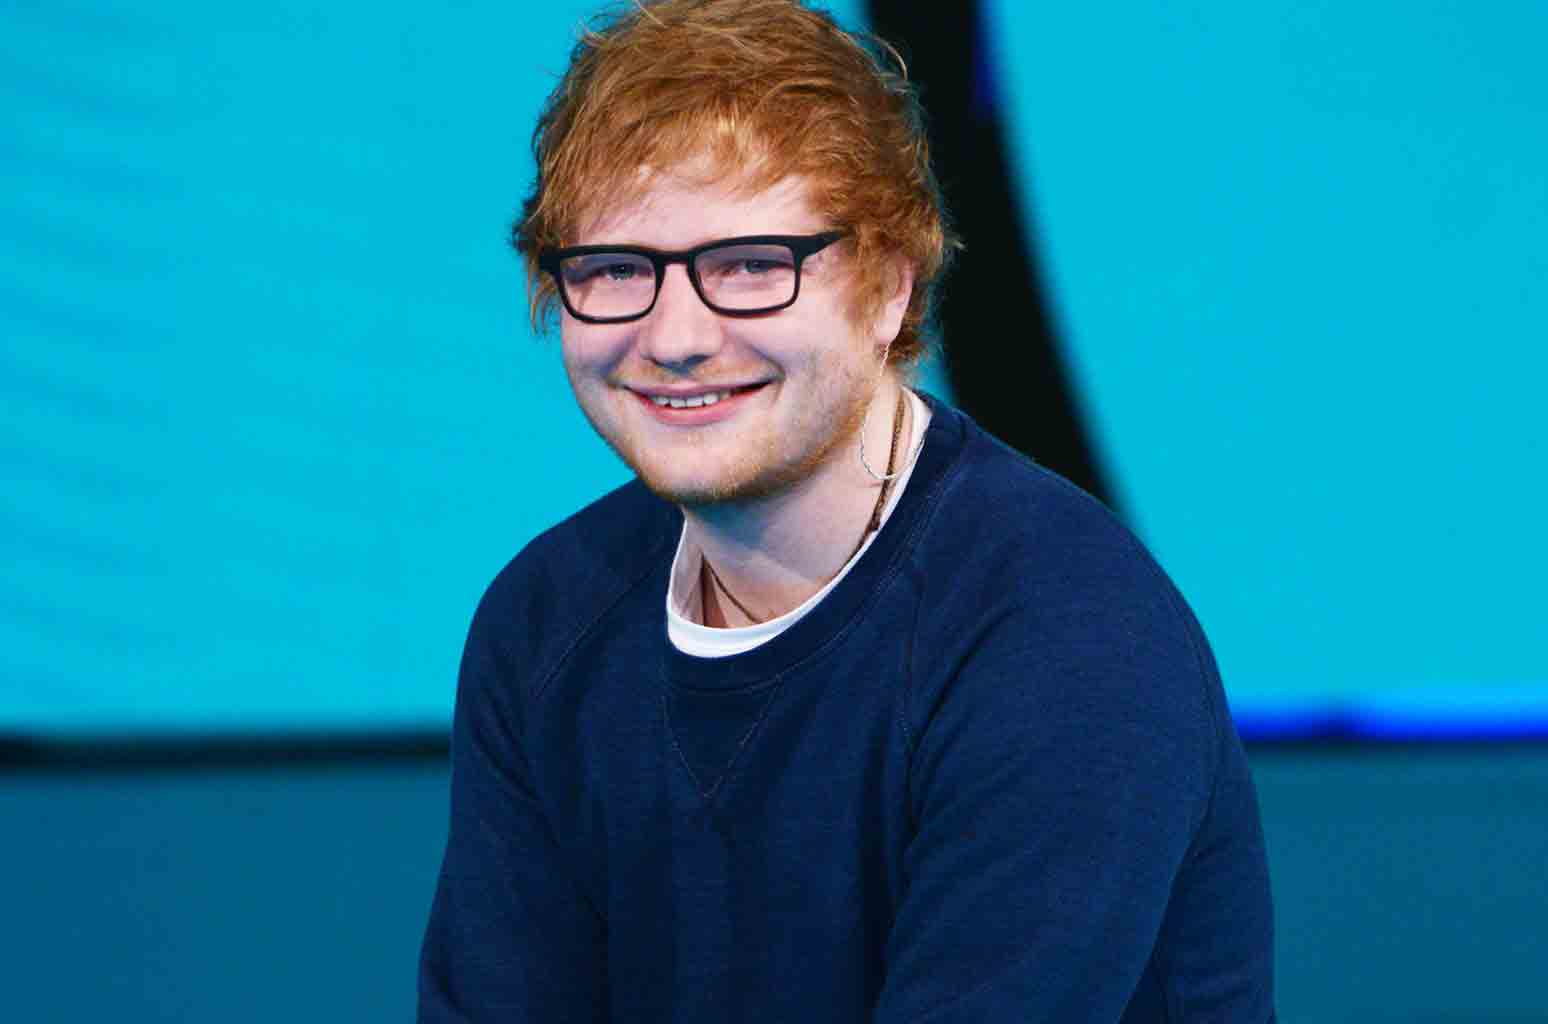 Ed-Sheeran-TV-UK-2017-billboard-1548.jpg